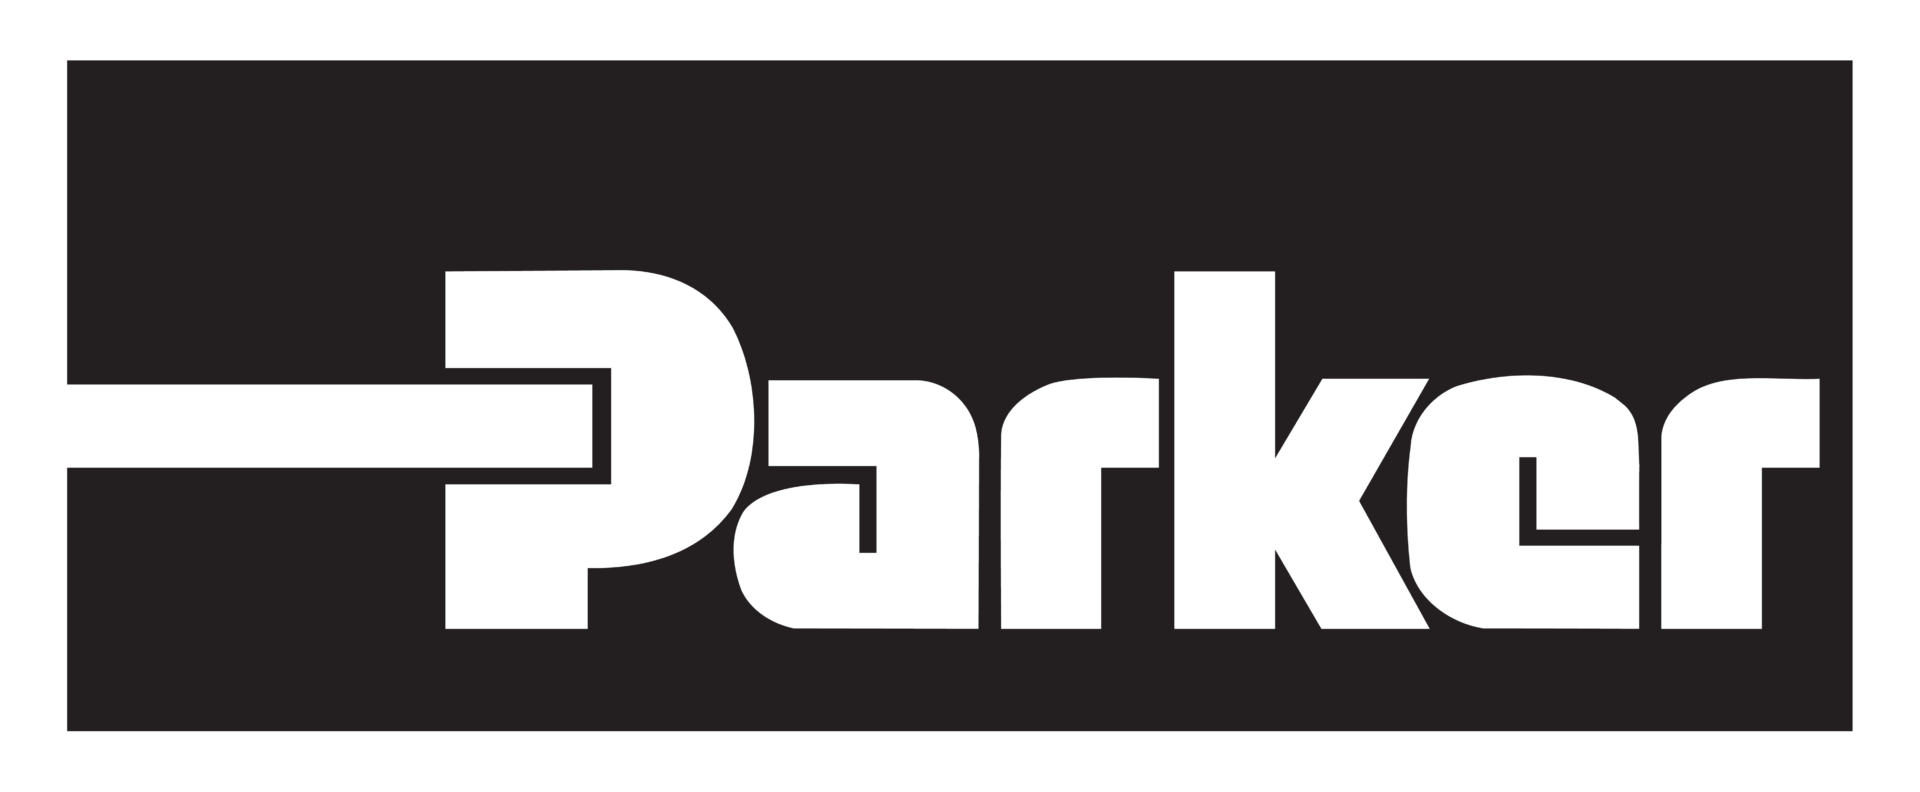 purepng.com parker hannifin logologobrand logoiconslogos 2515199387710dv6x - Certificates and awards